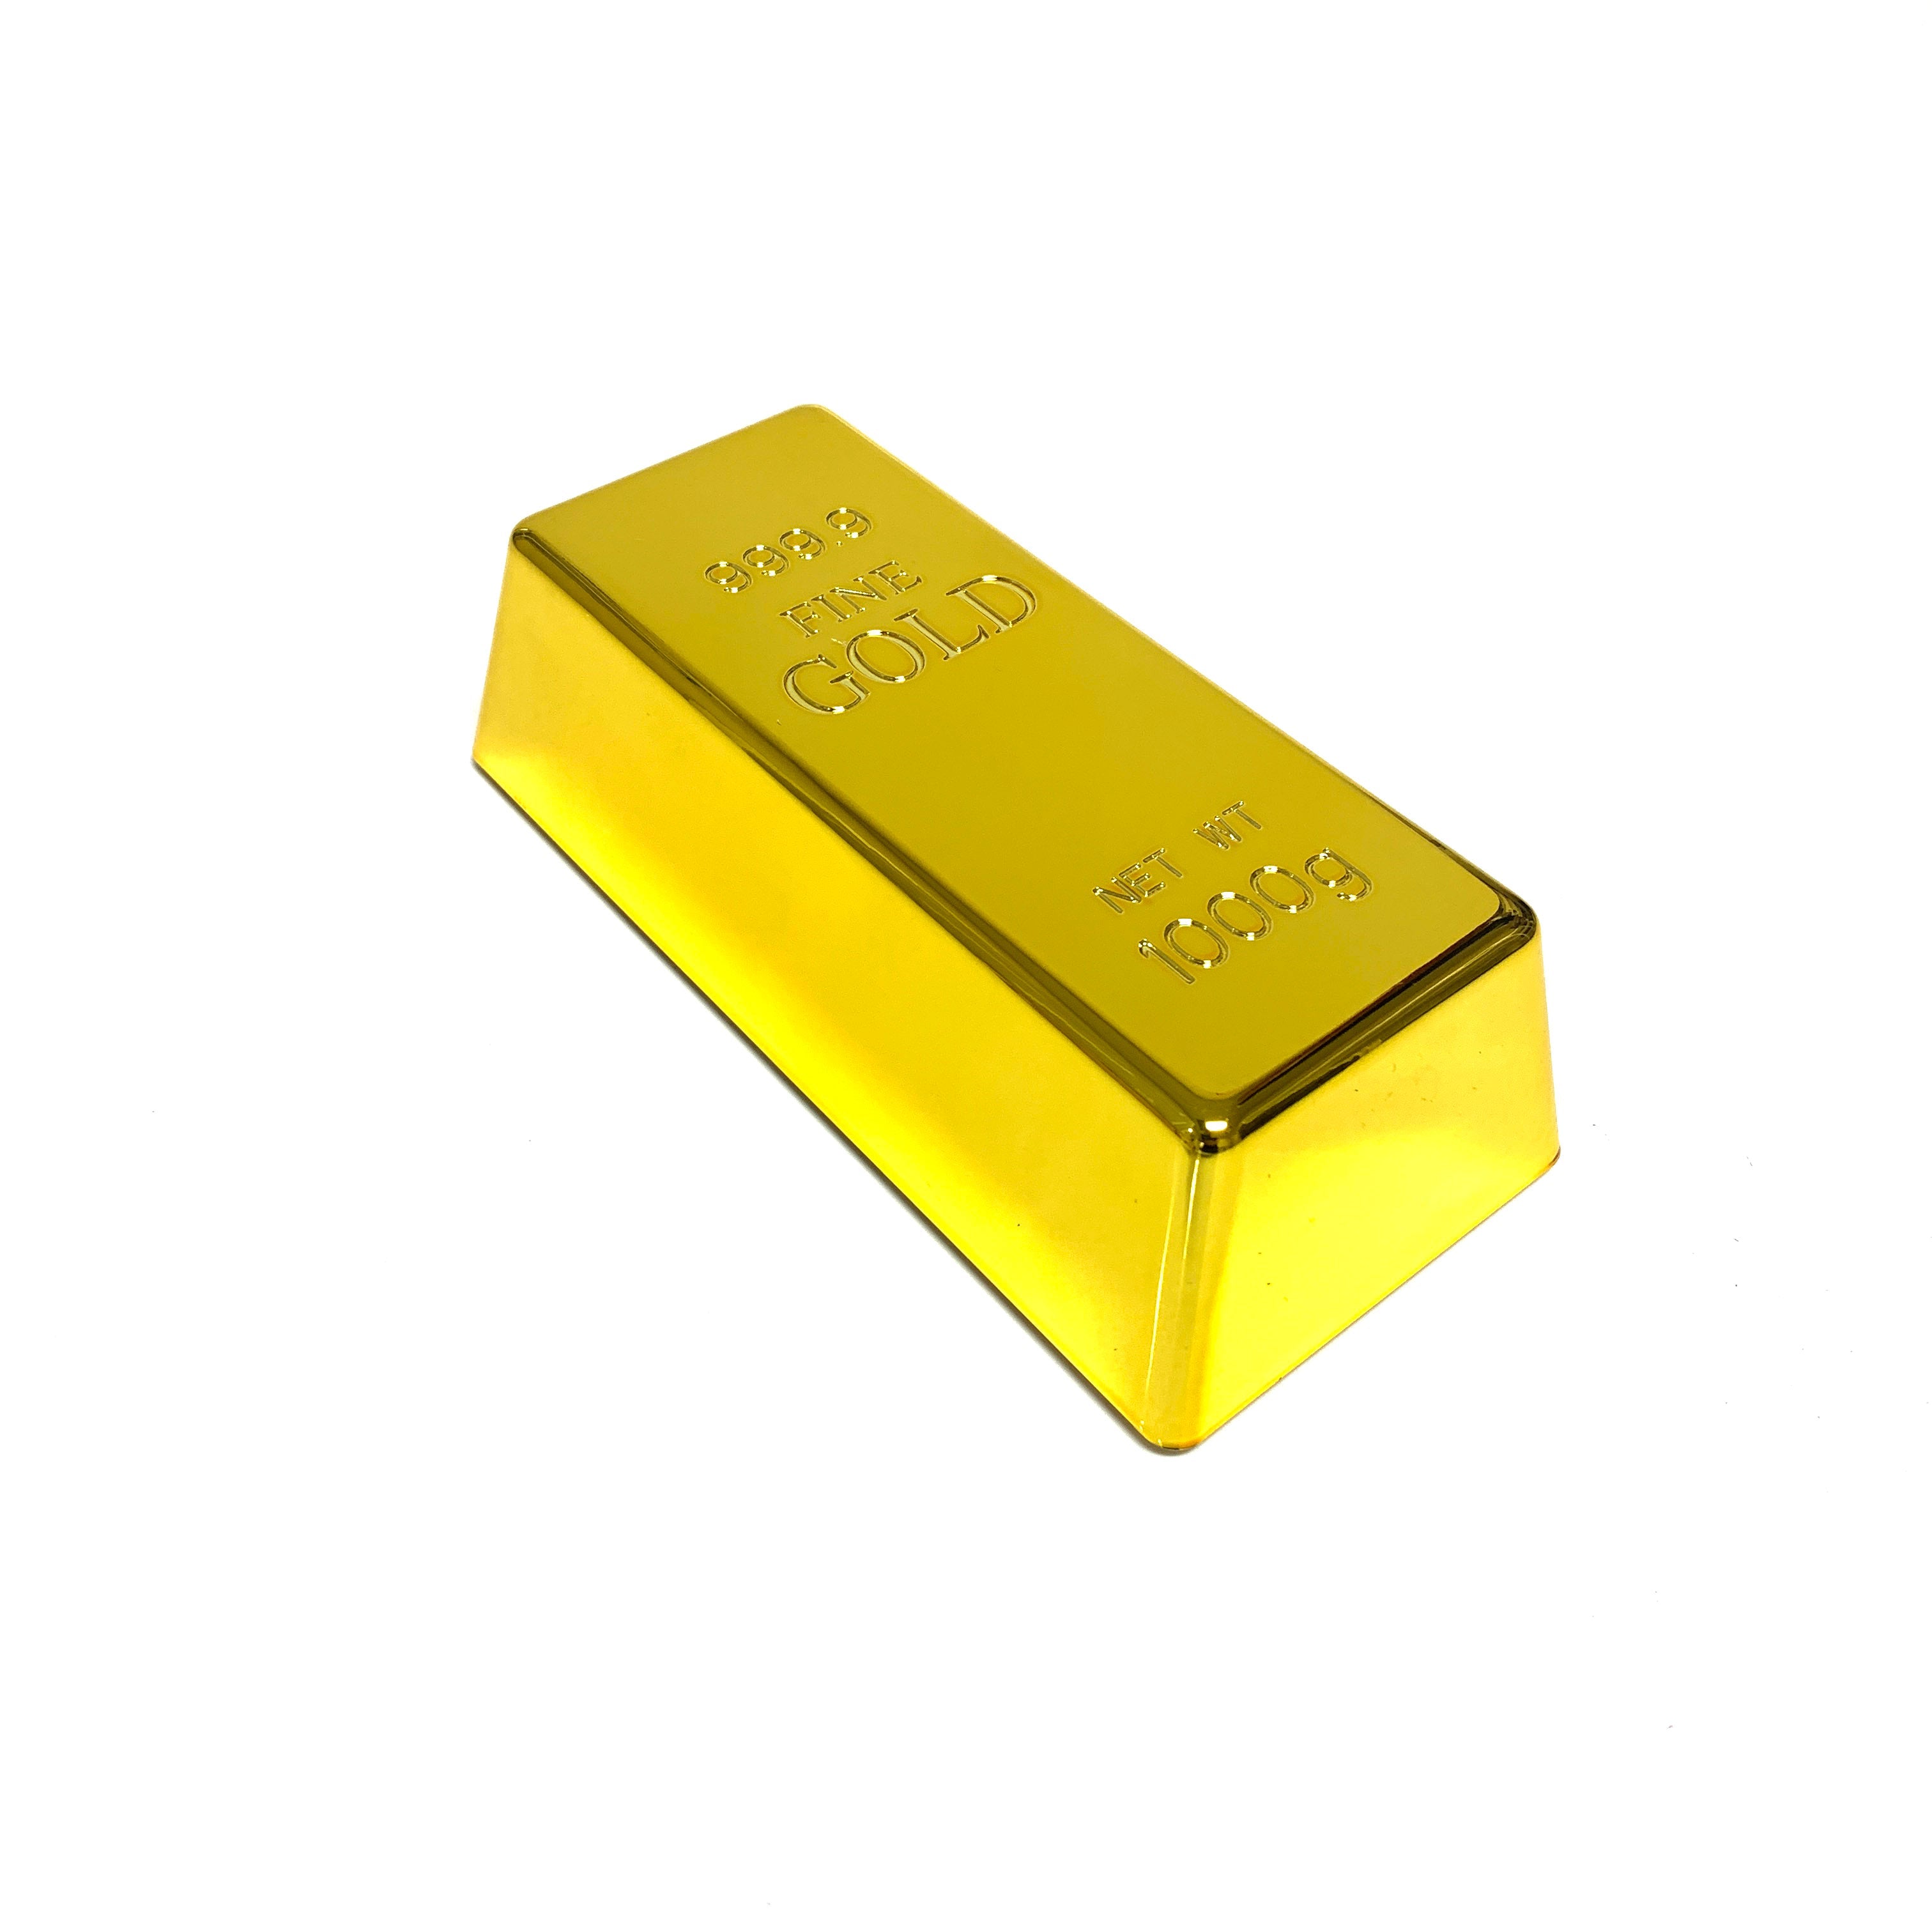 Large Gold Bar Plastic Replica - Lightweight Hollow Prop